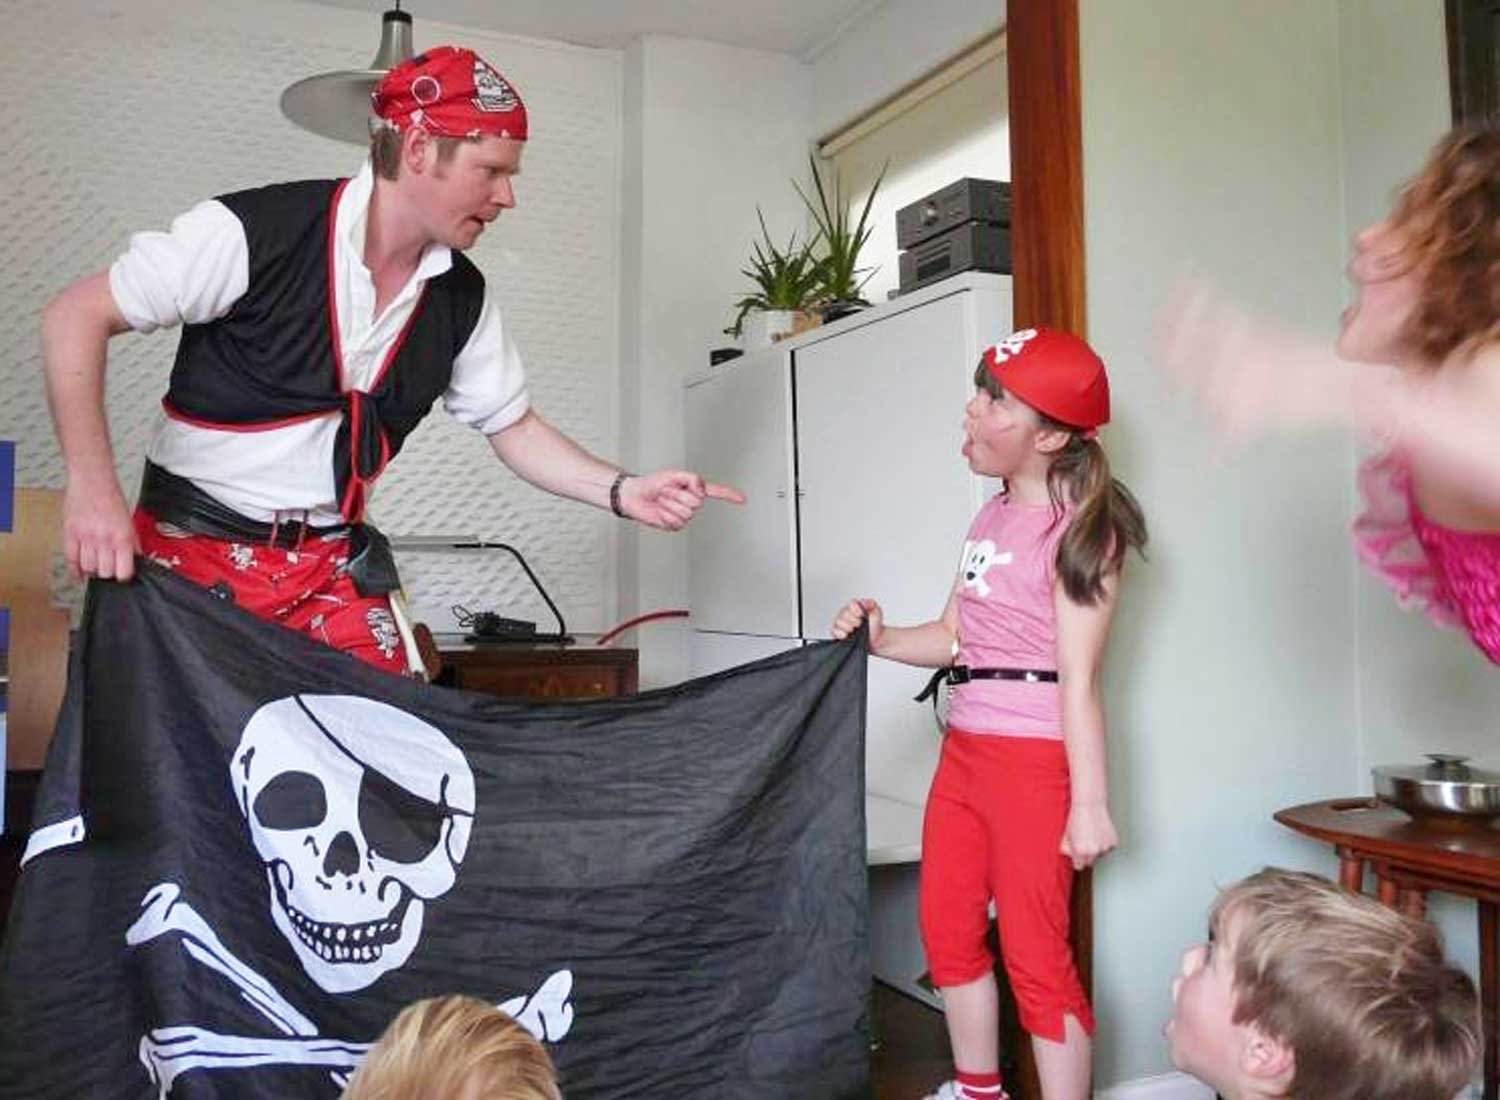 Pirate Dan's Treasure Hunt - Adventure Party Themes - Nutty's Children's Parties 19.jpg